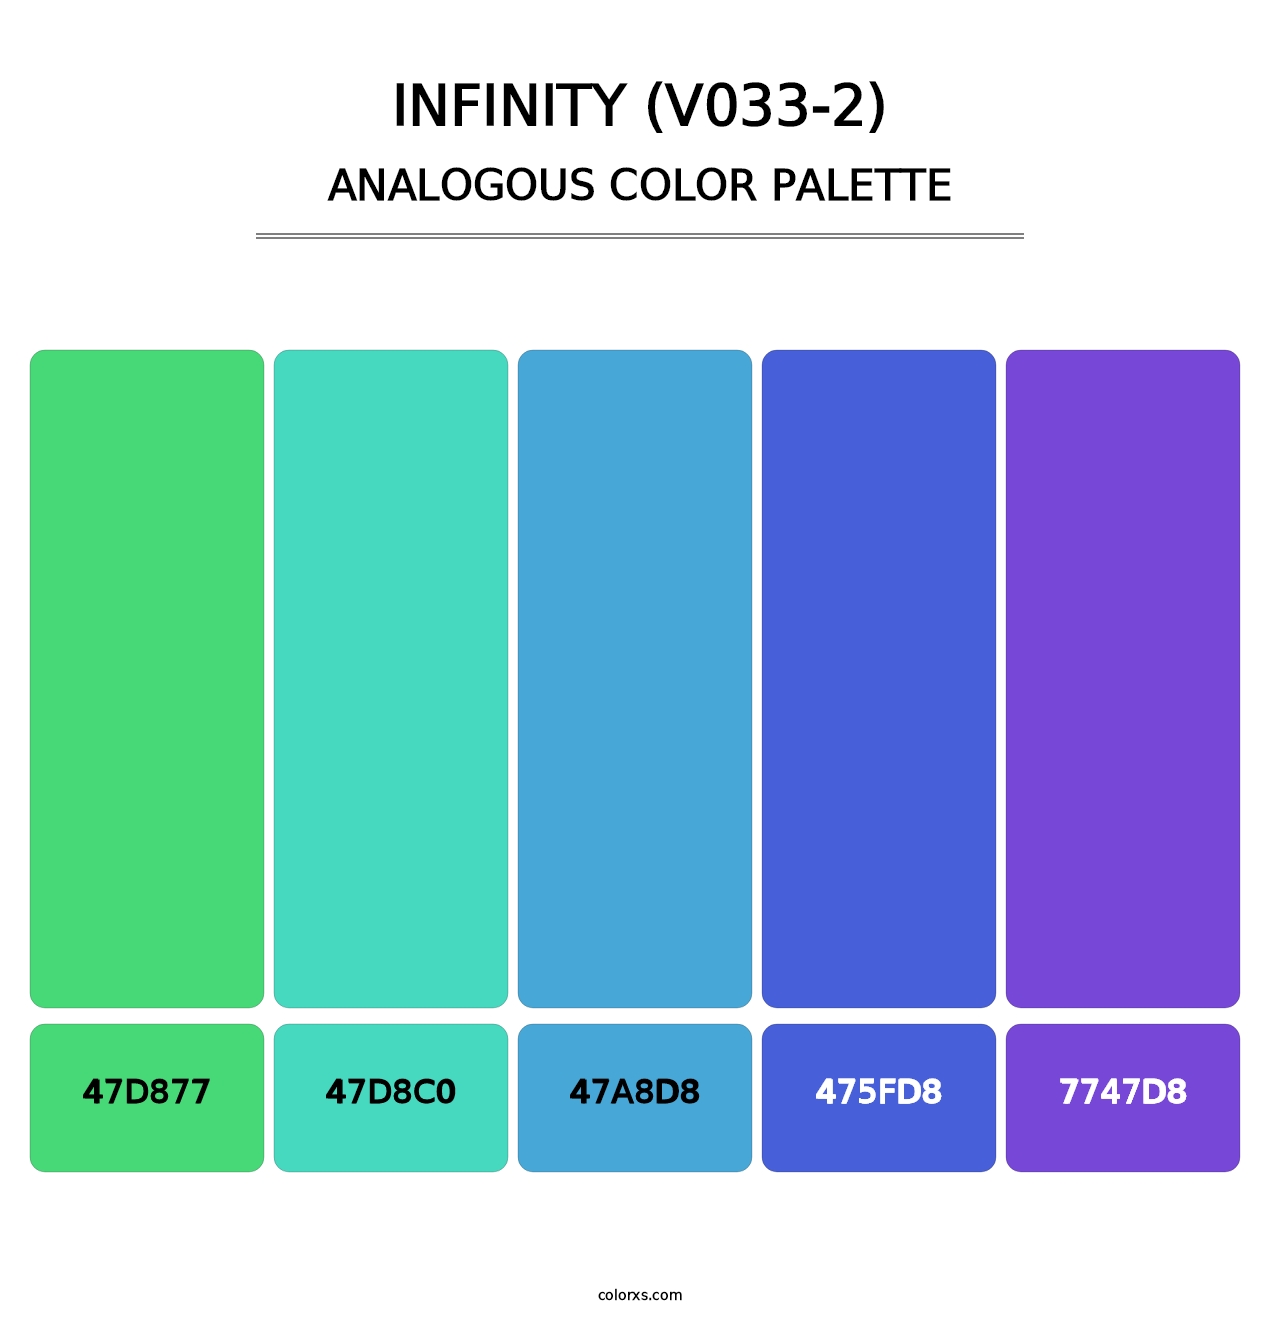 Infinity (V033-2) - Analogous Color Palette